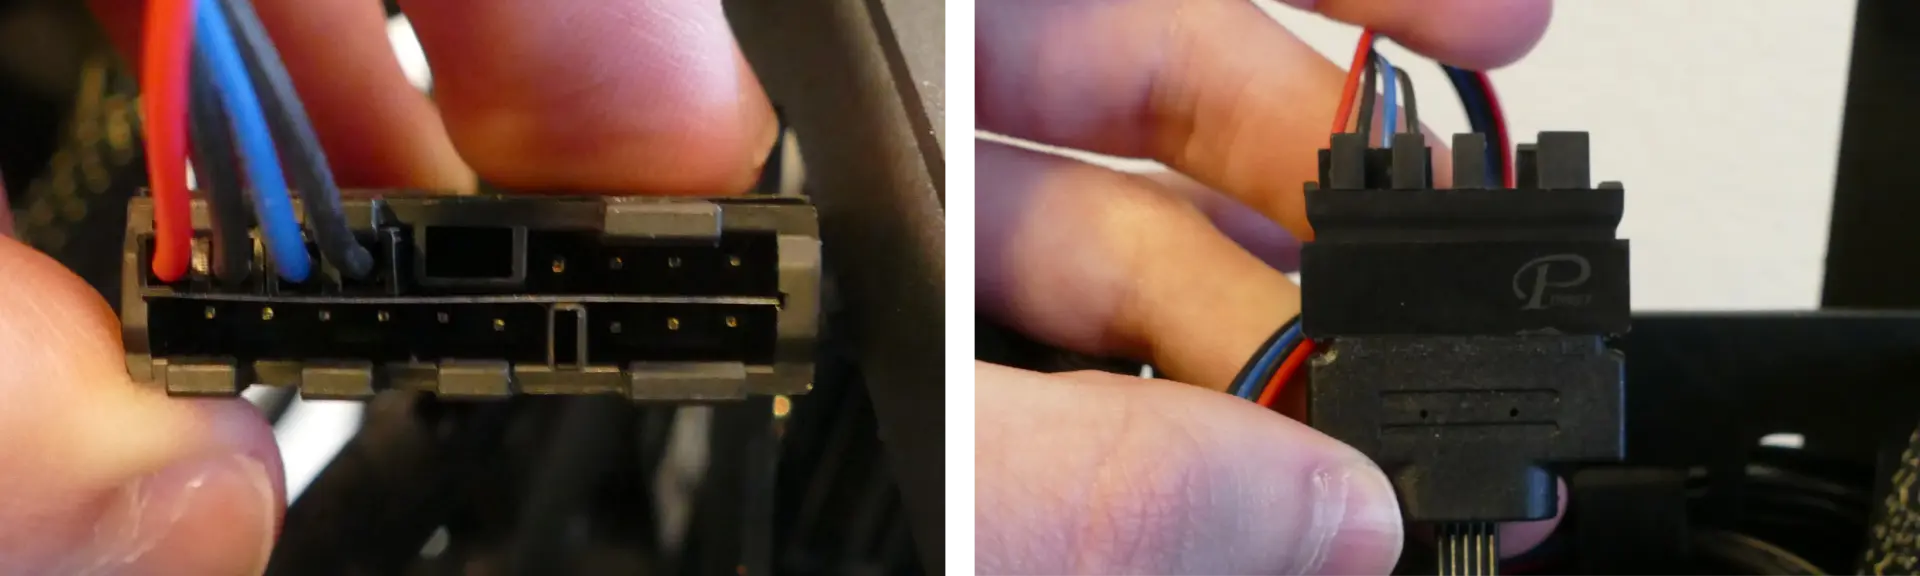 Power button wiring adapter